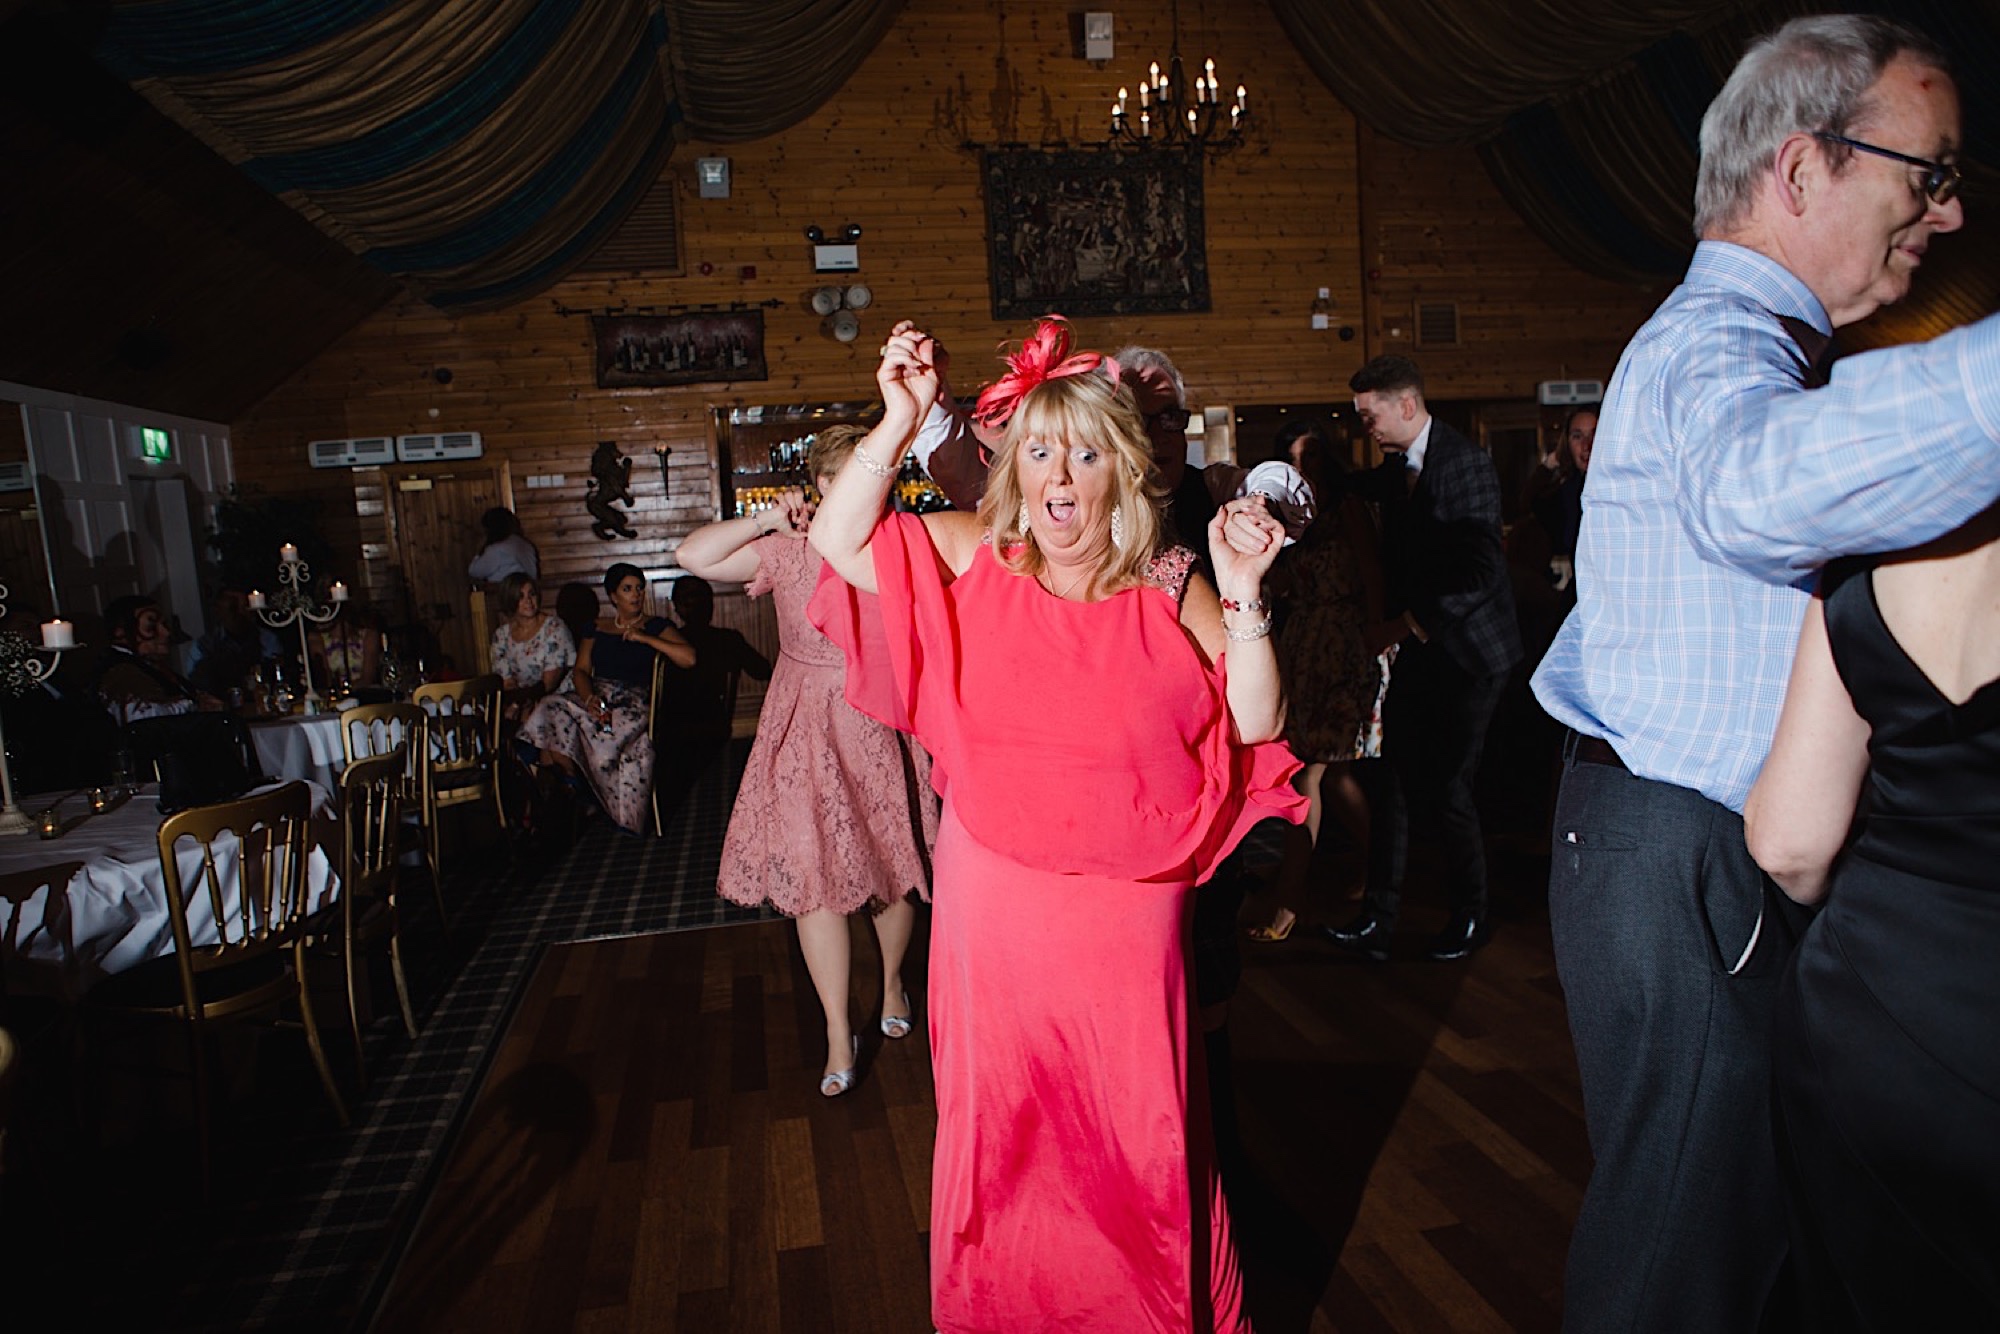 scottish ceilidh dancing at the cruin loch lomand wedding